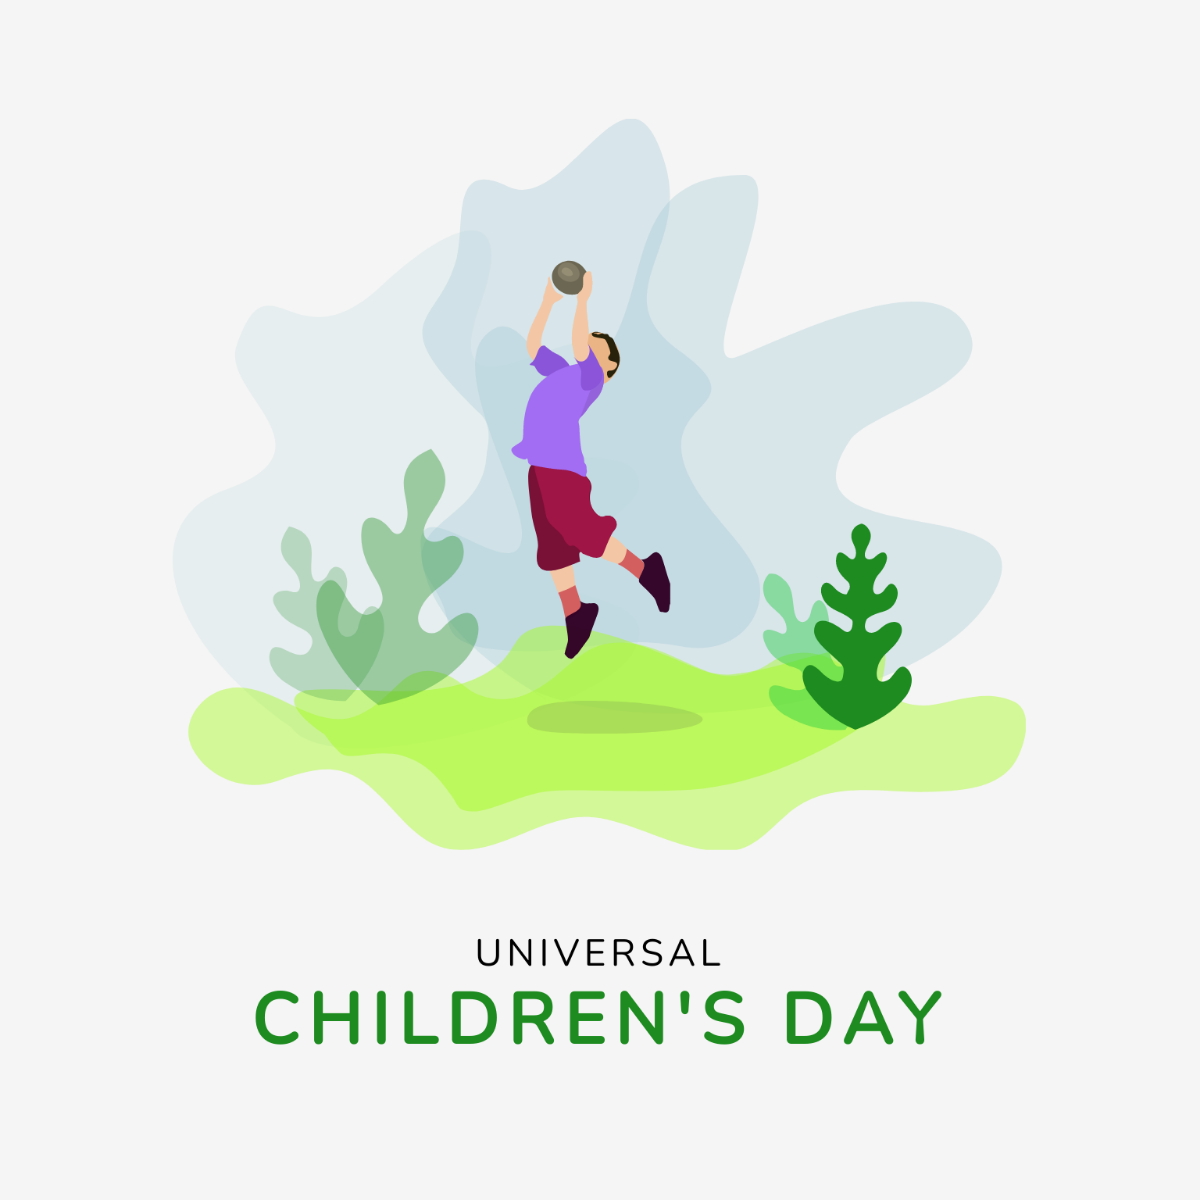 Happy Universal Children’s Day Illustration Template